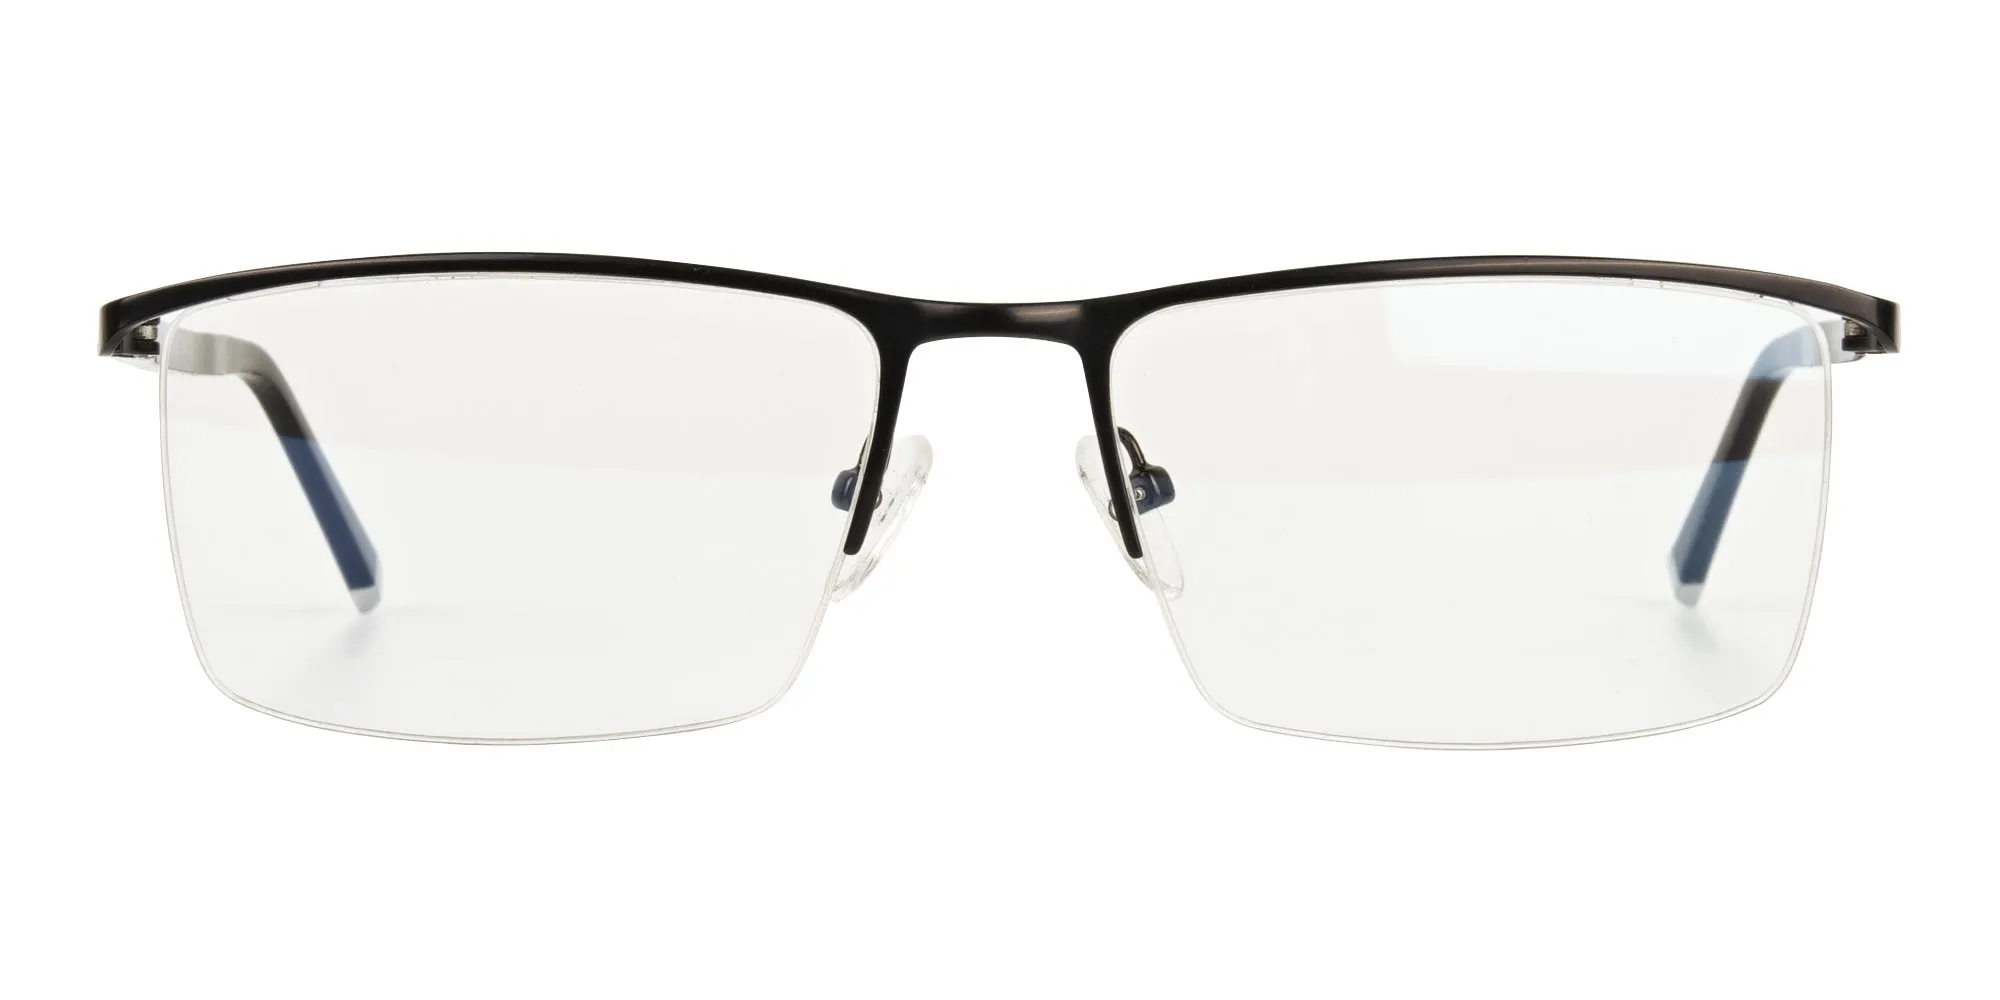 Black Semi-Rimless Glasses in Rectangular-2